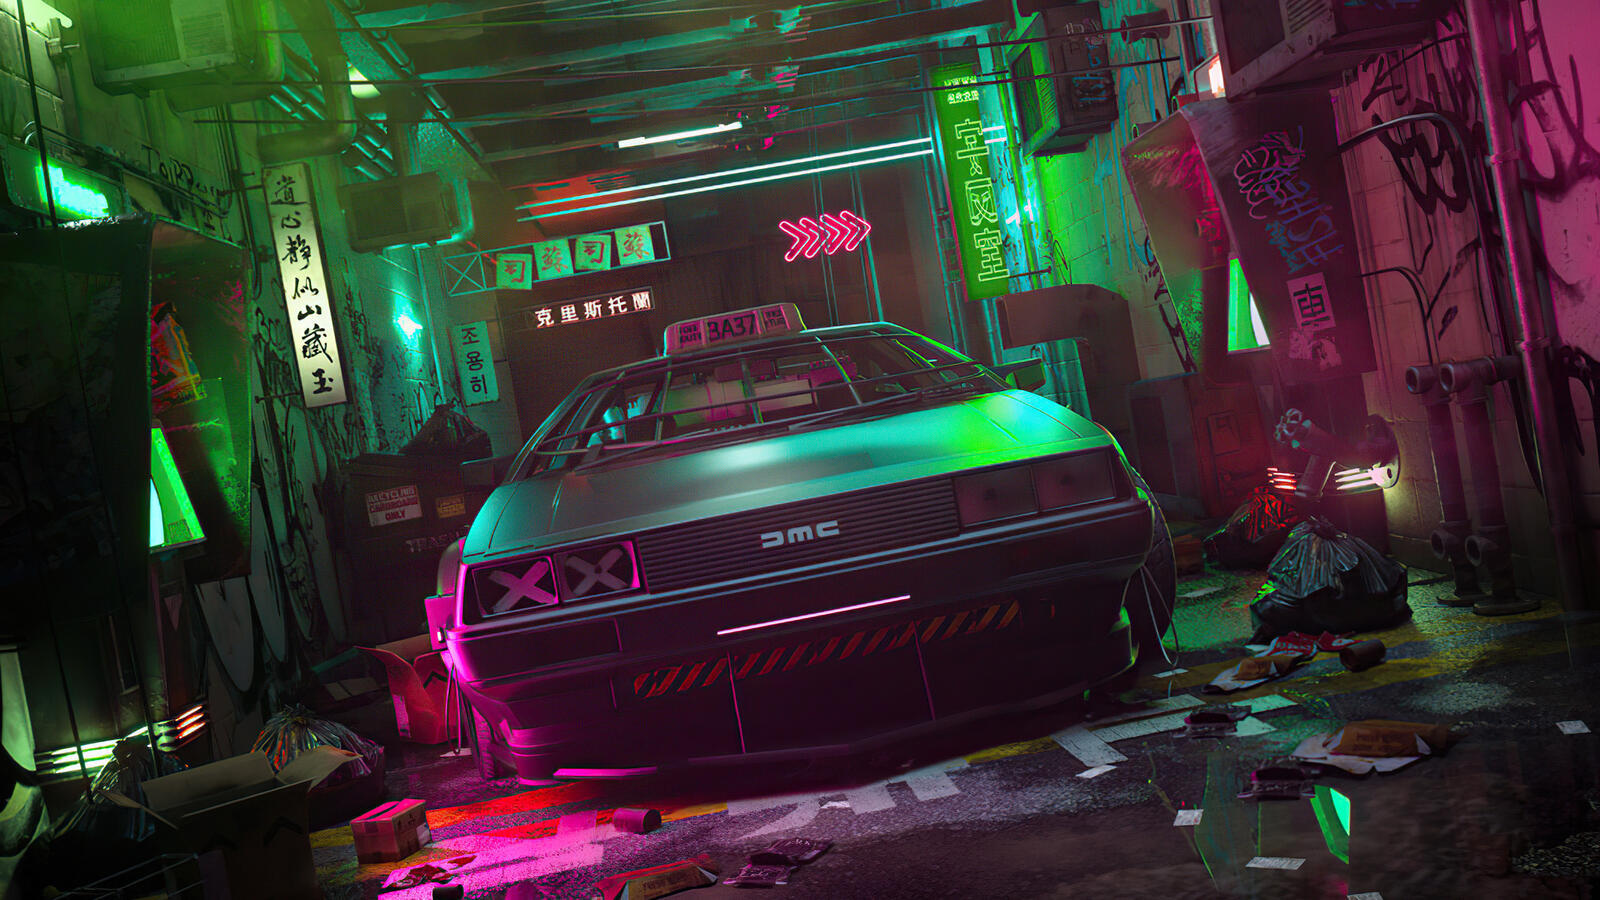 Wallpapers science fiction cyberpunk cars on the desktop